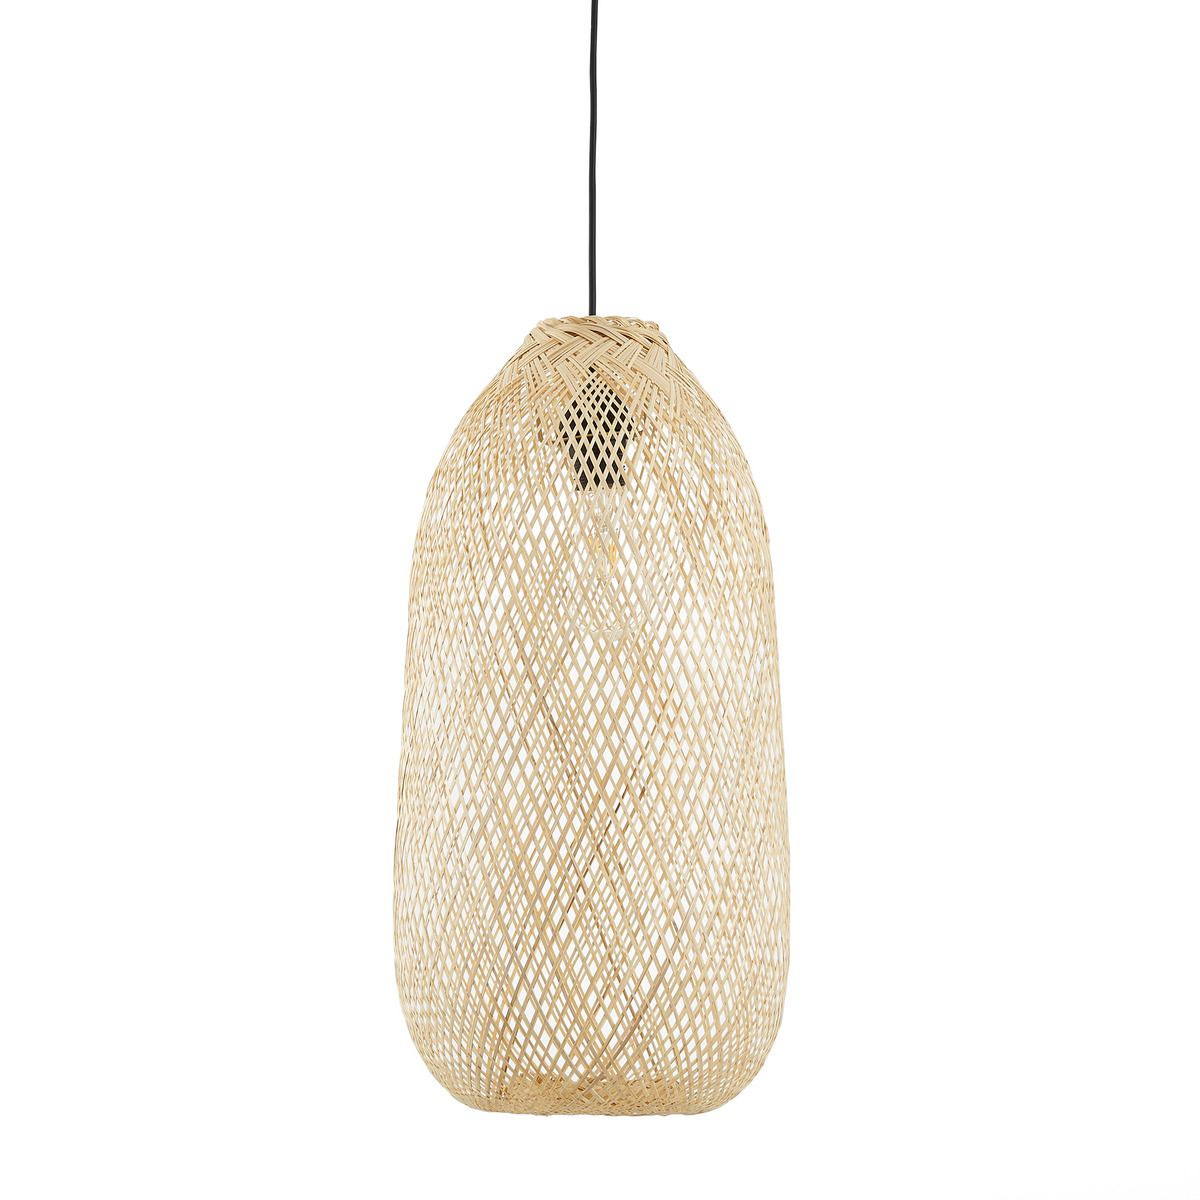 Ezia 30cm Diameter Bamboo Ceiling Light Shade - image 1